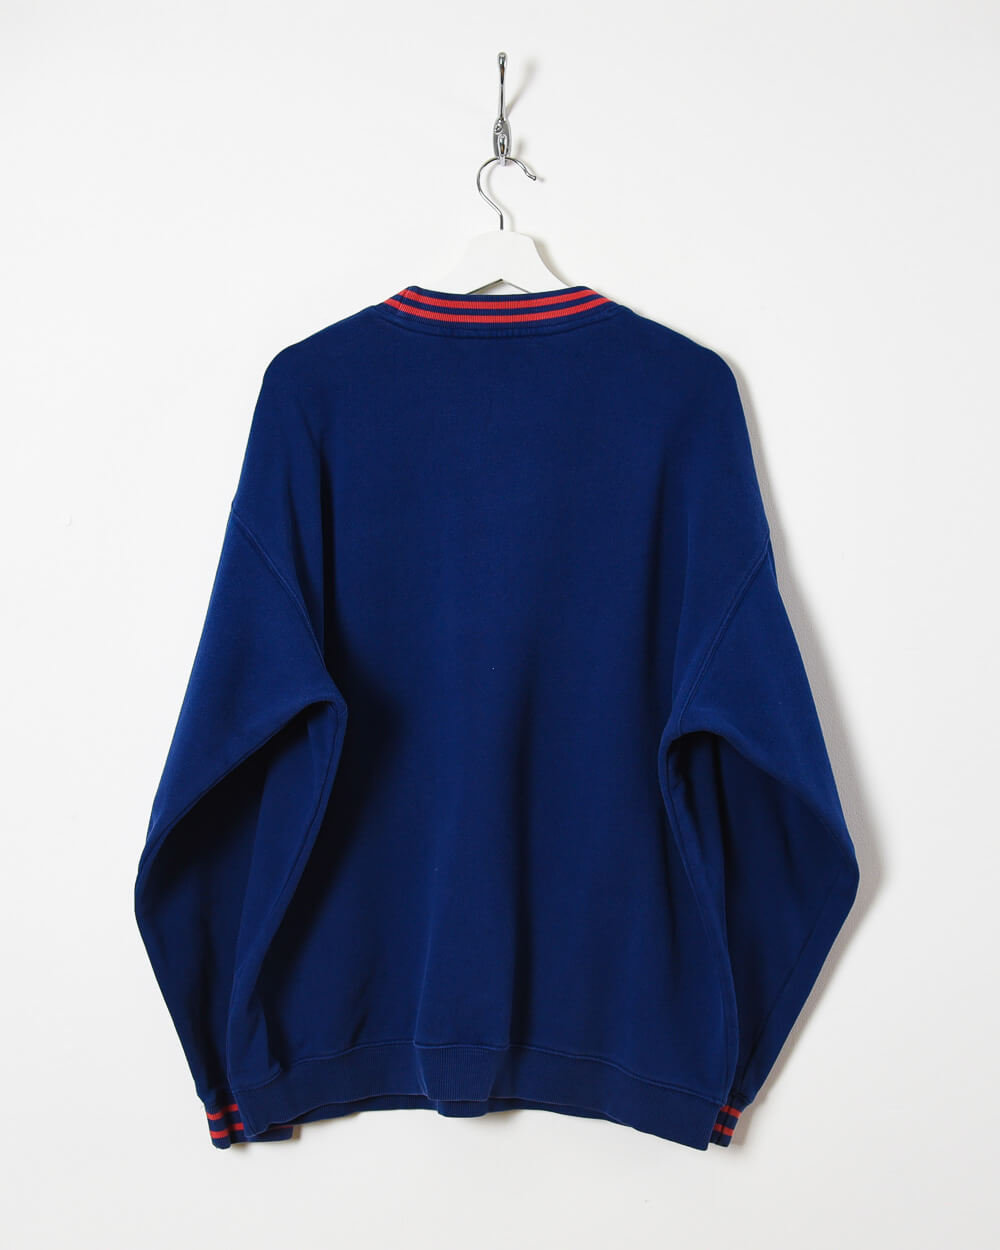 Fila Sweatshirt - XX-Large - Domno Vintage 90s, 80s, 00s Retro and Vintage Clothing 